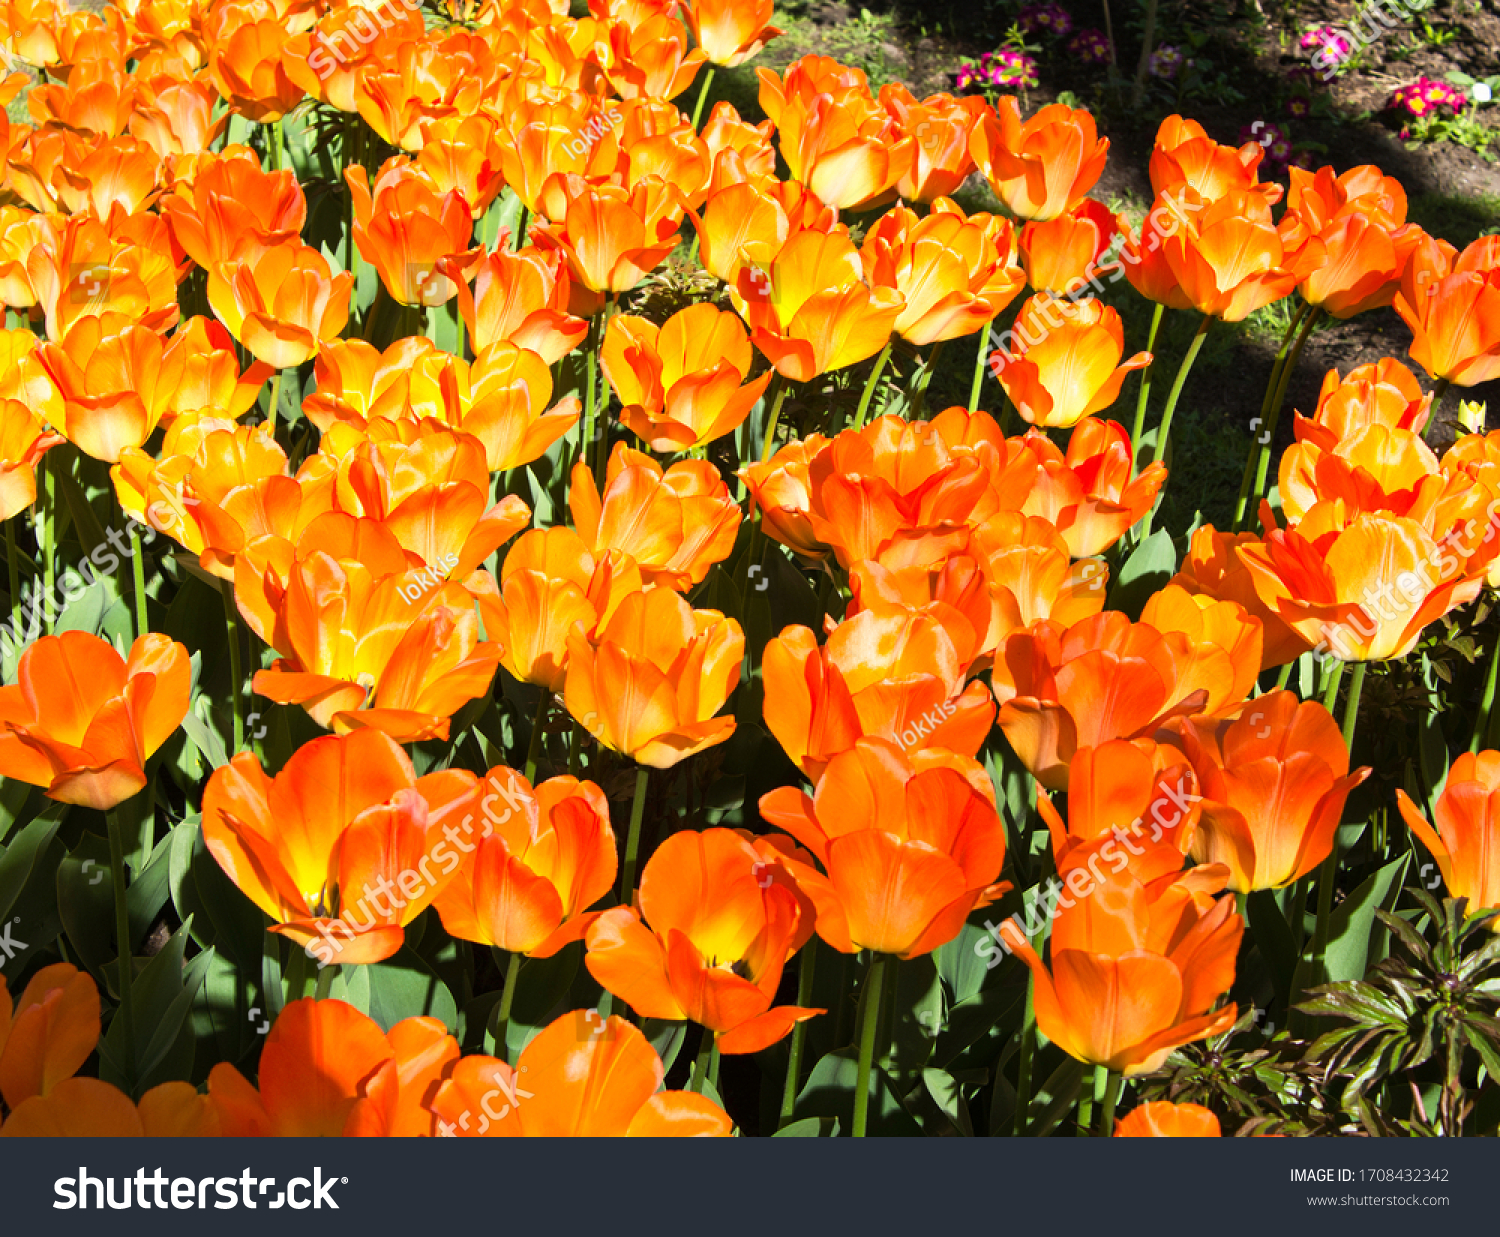 Spring background with beautiful orange tulips #1708432342